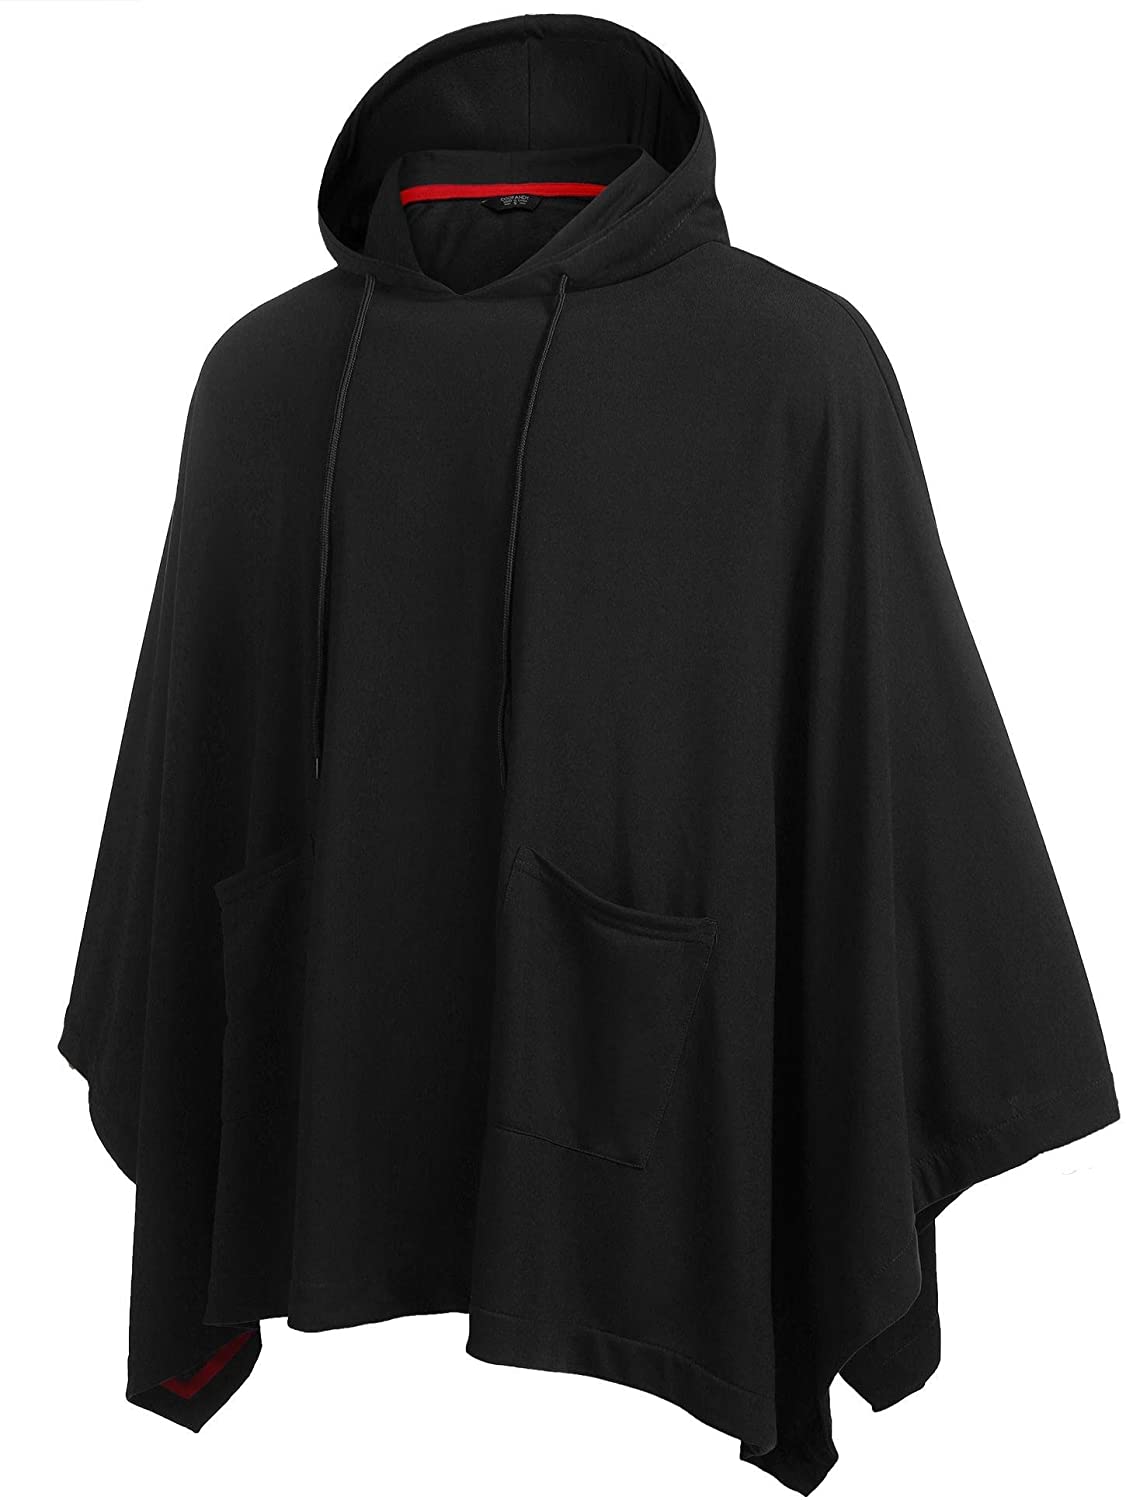 COOFANDY Unisex Casual Hooded Poncho Cape Cloak Fashion Coat Hoodie ...